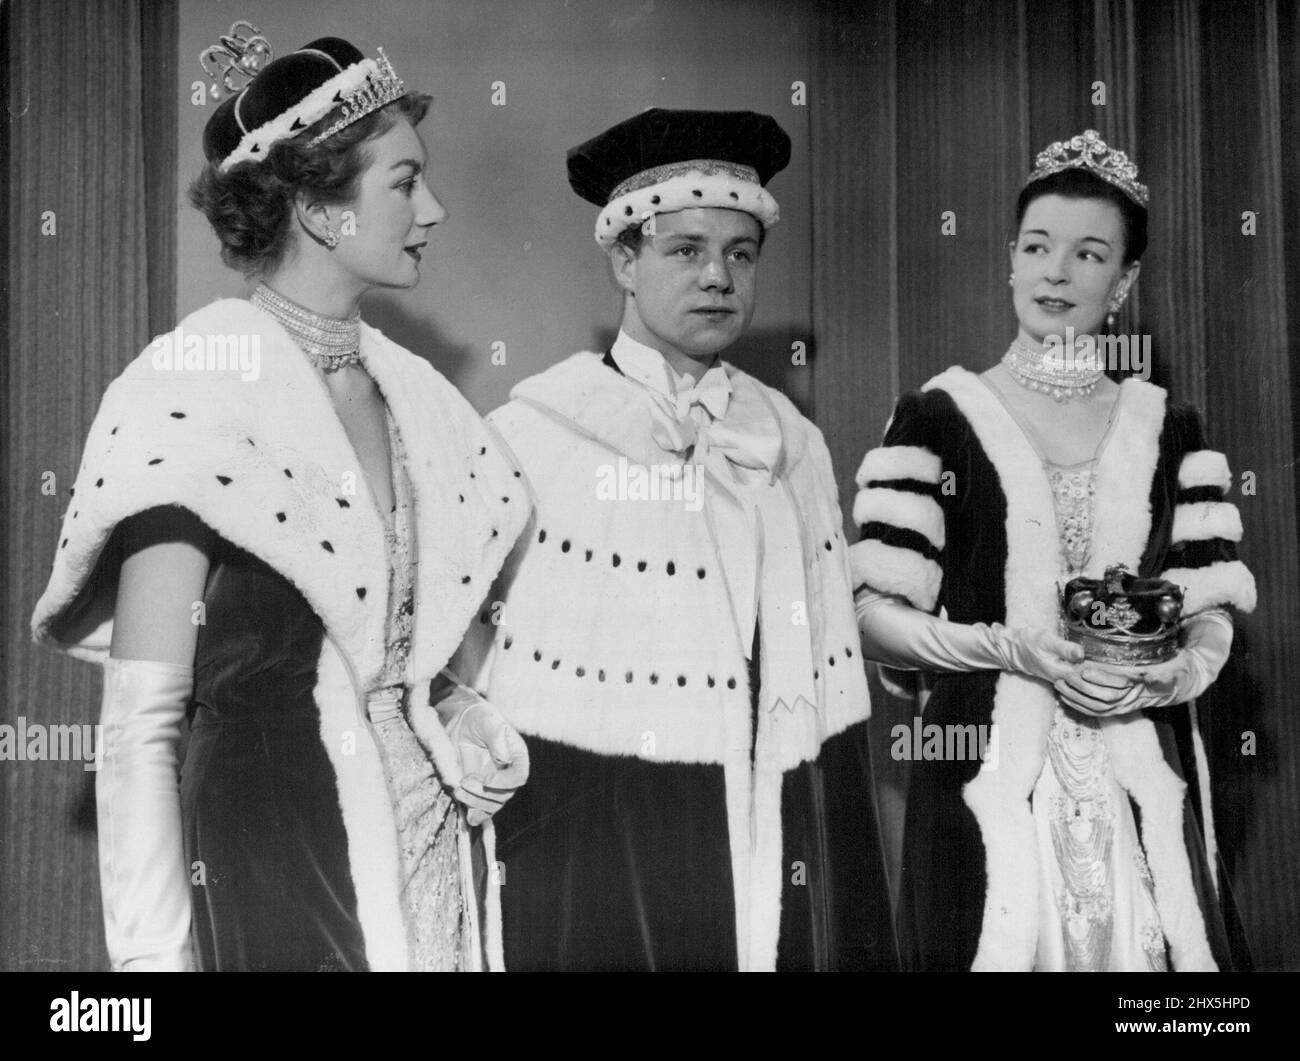 Queen Elizabeth II Coronation - 1953 - Mode, Koronetten und Frisuren - British Royalty. 11. Januar 1953. Stockfoto